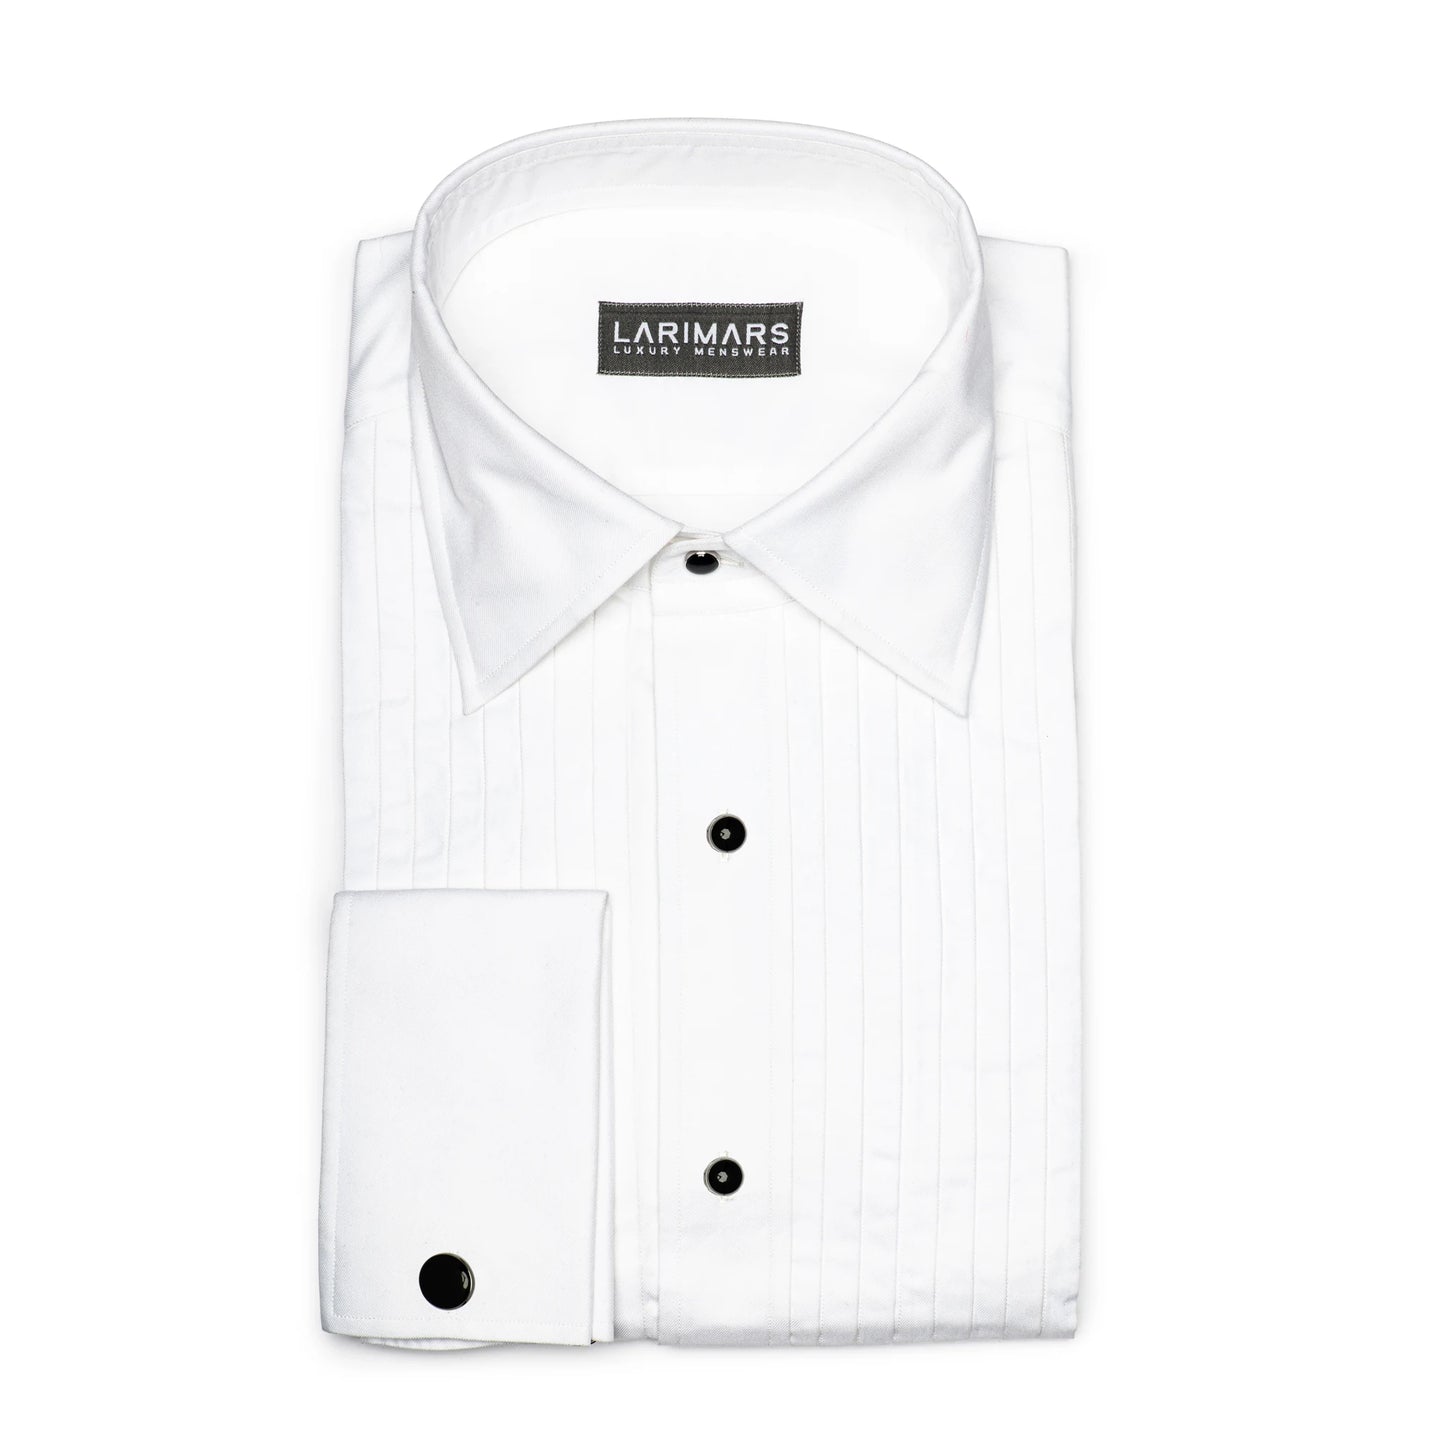 Elegant White Tuxedo Shirt - Larimars Clothing Men's Formal and casual wear shirts